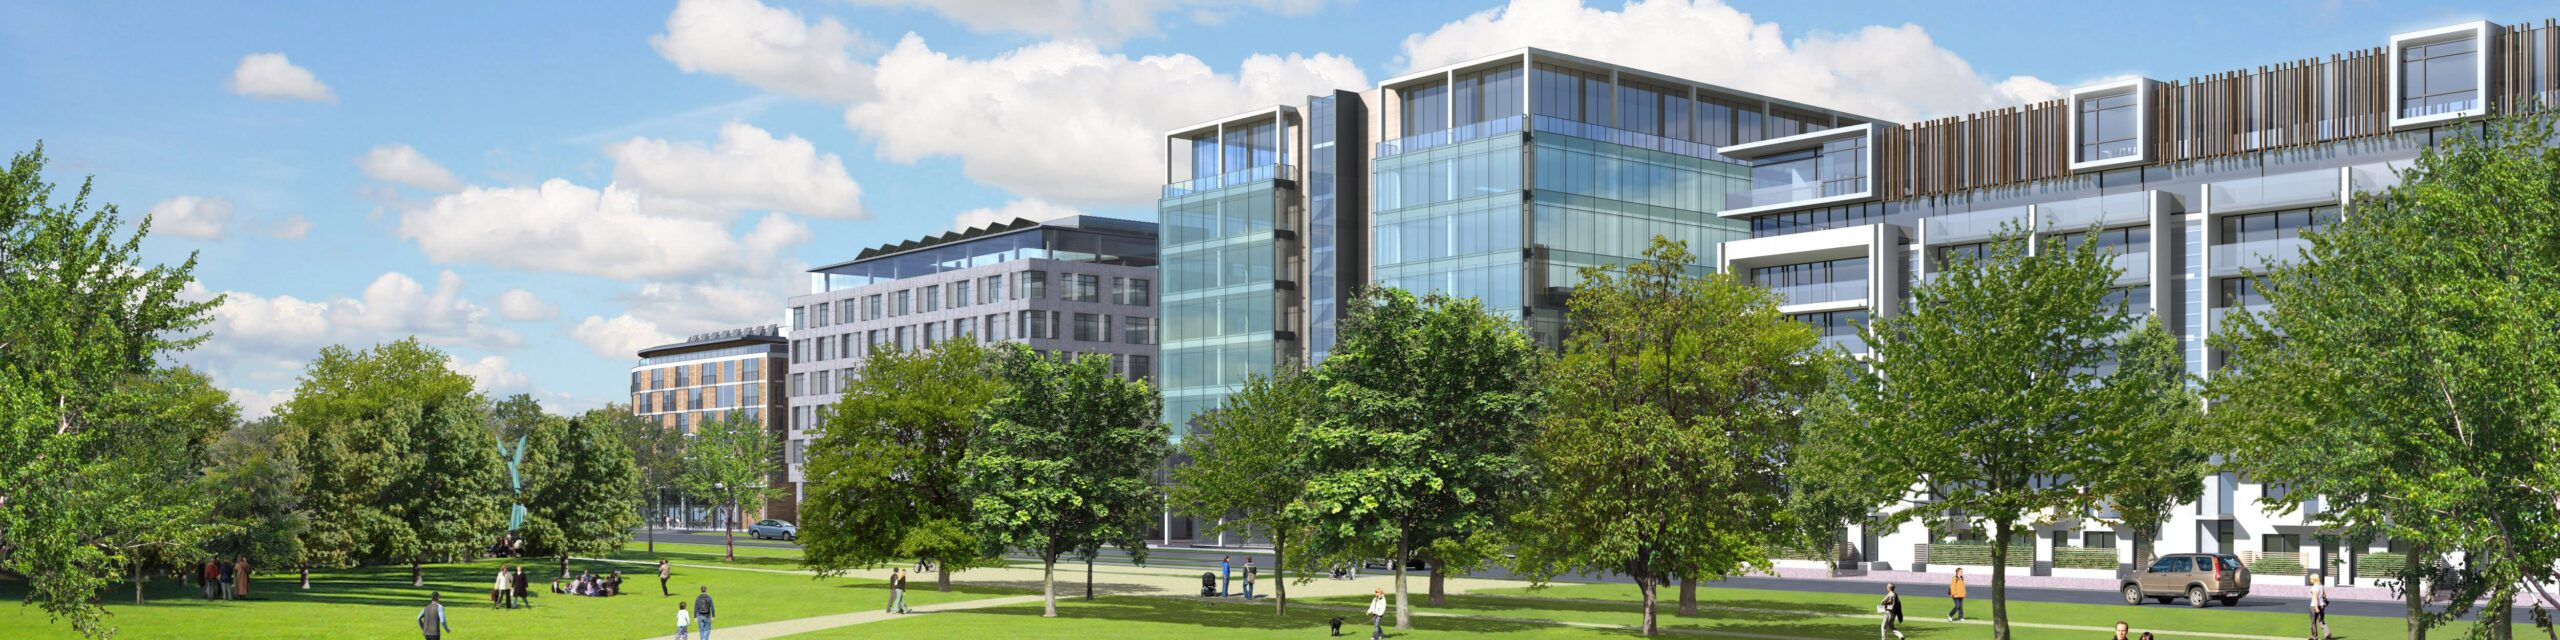 Cork South Docklands Masterplan & Vision - Urban Strategies